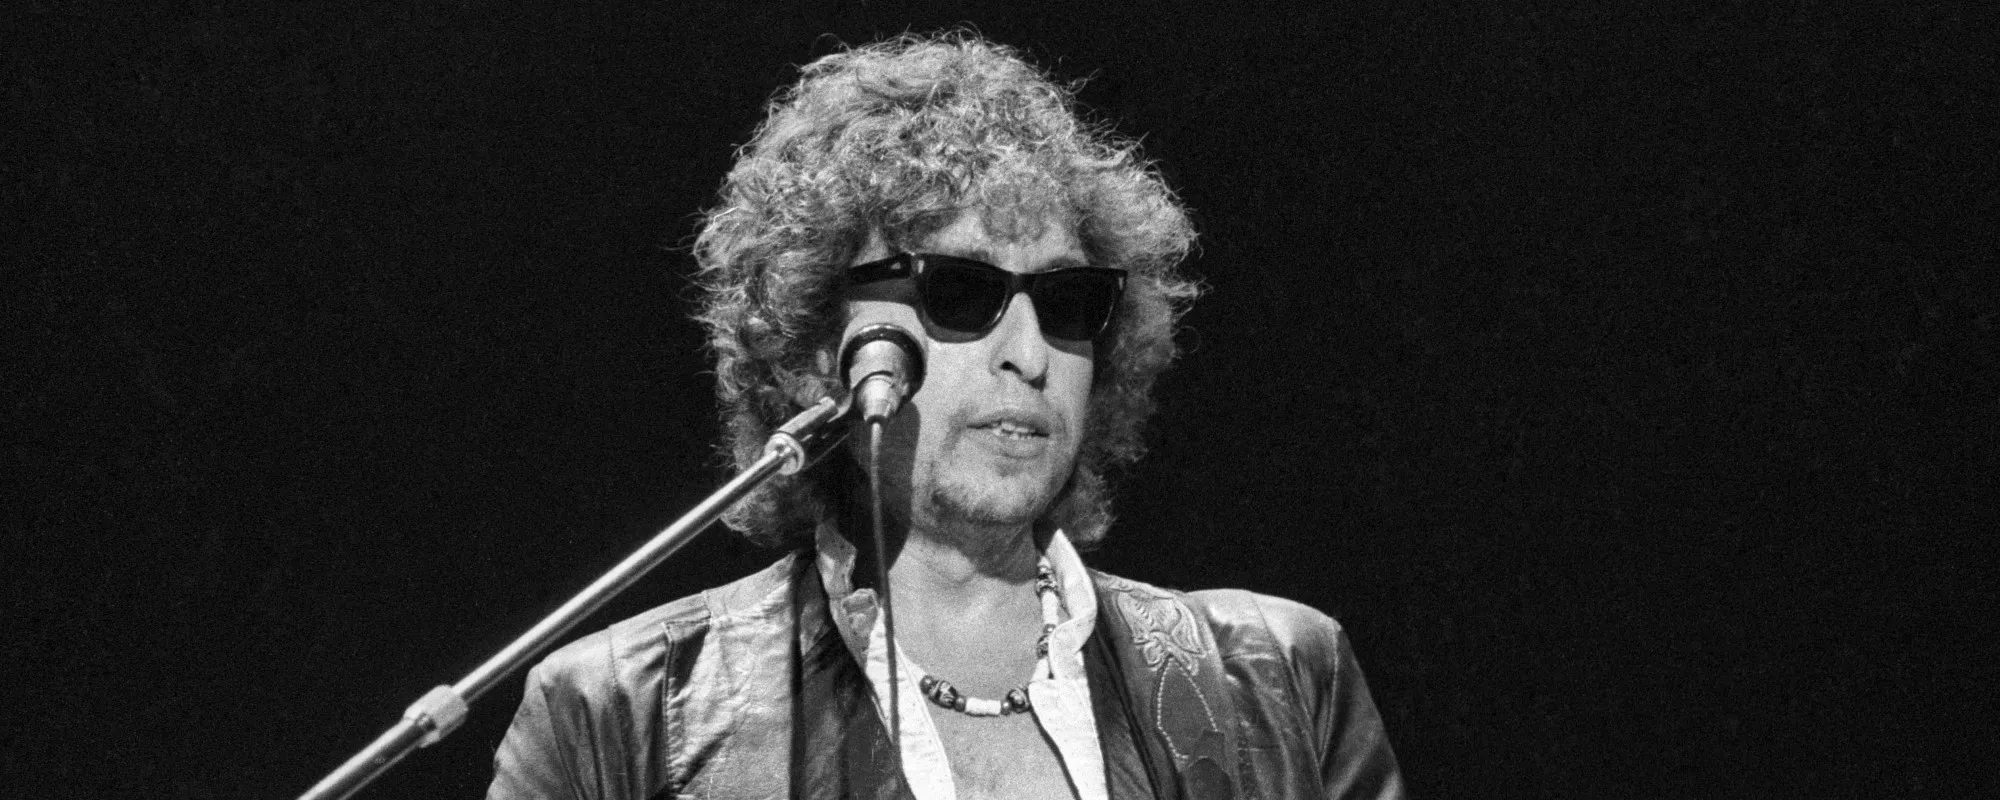 Keith Richards’ Favorite Bob Dylan Song